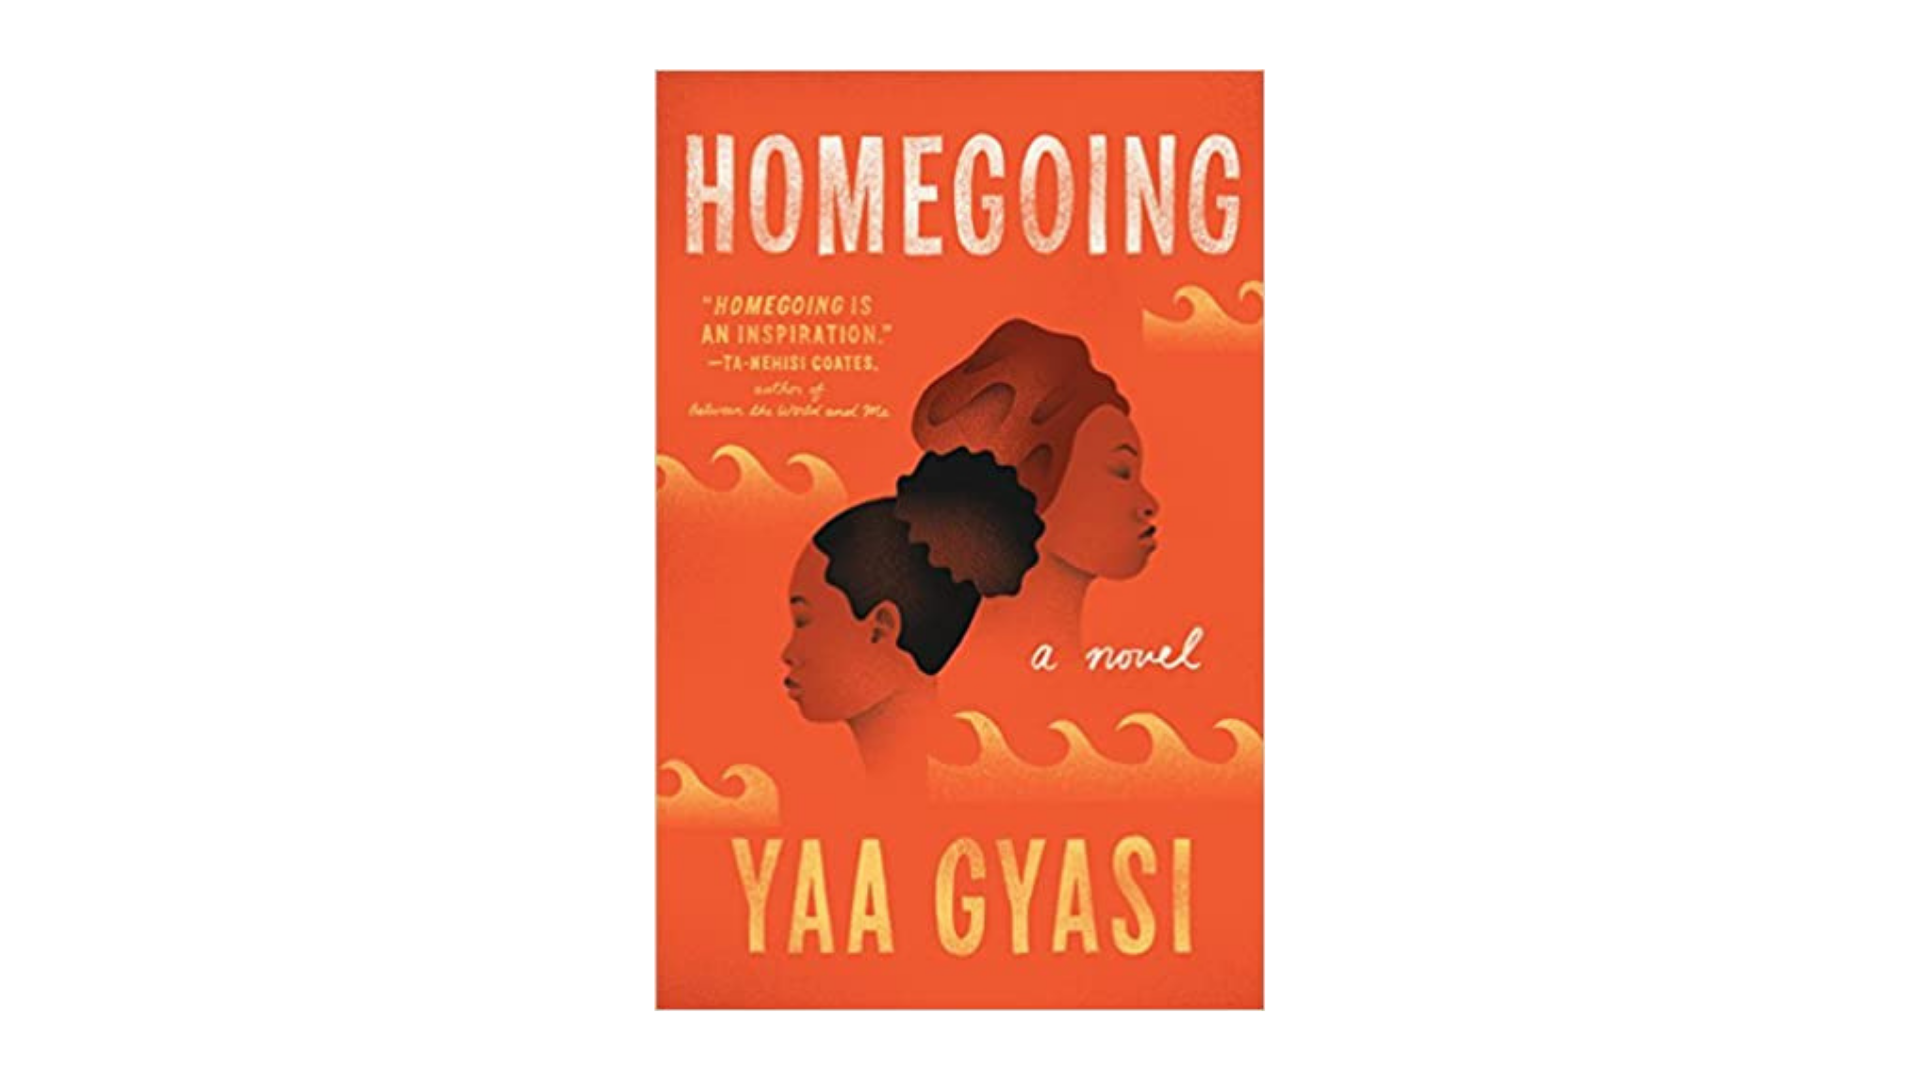 Yaa Gyasi best books by black authors